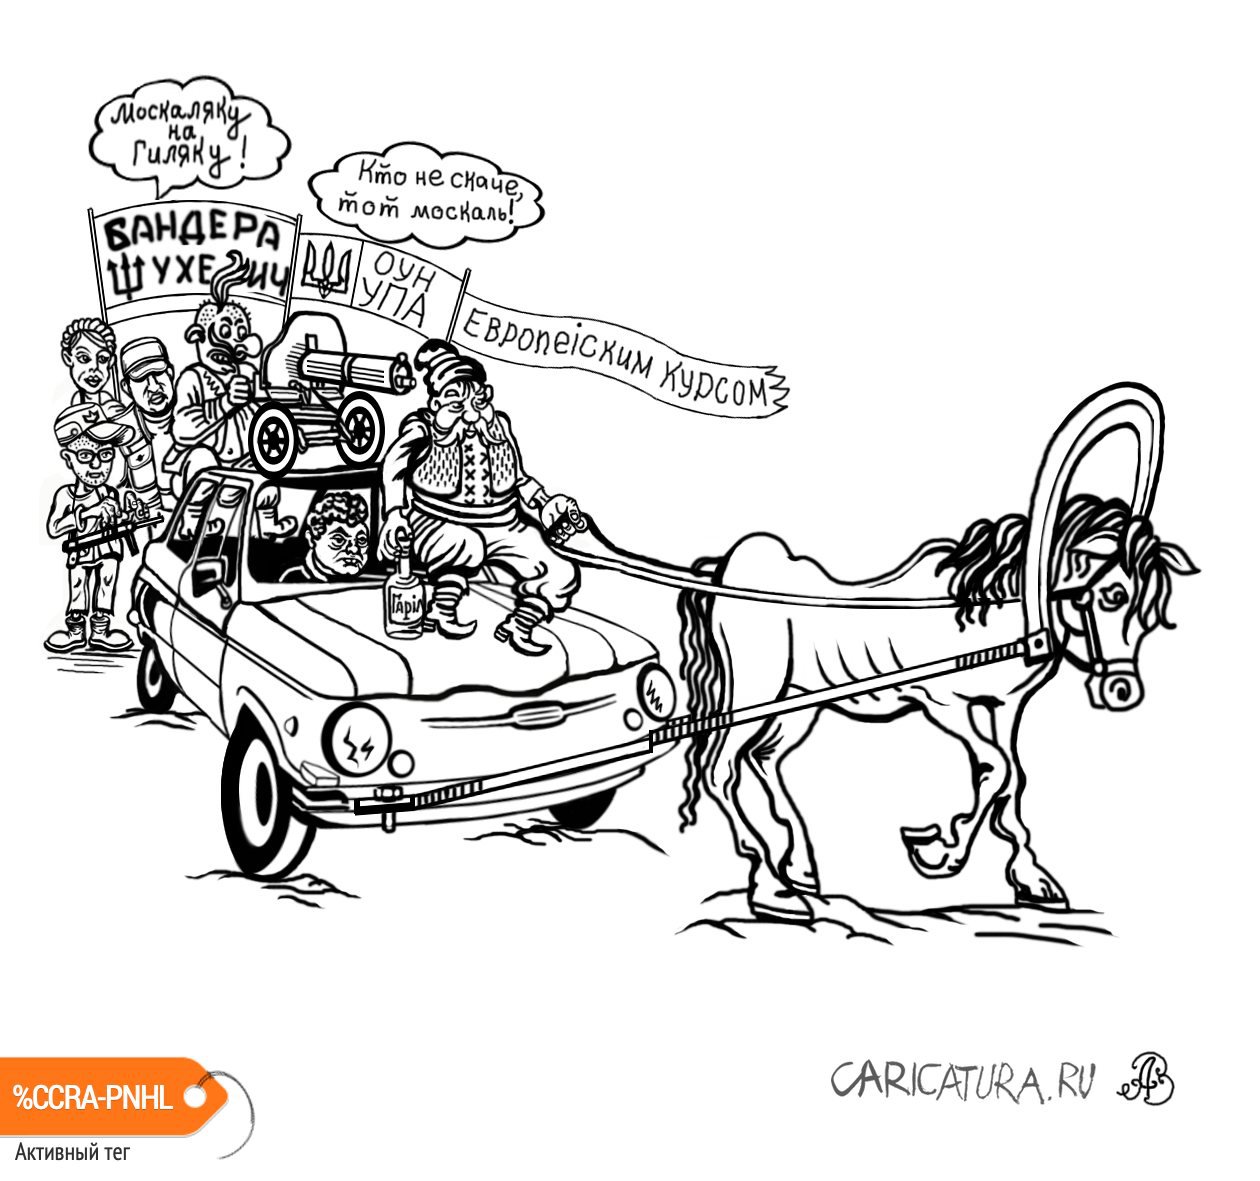 Карикатура "Европейским курсом", Андрей Ребров